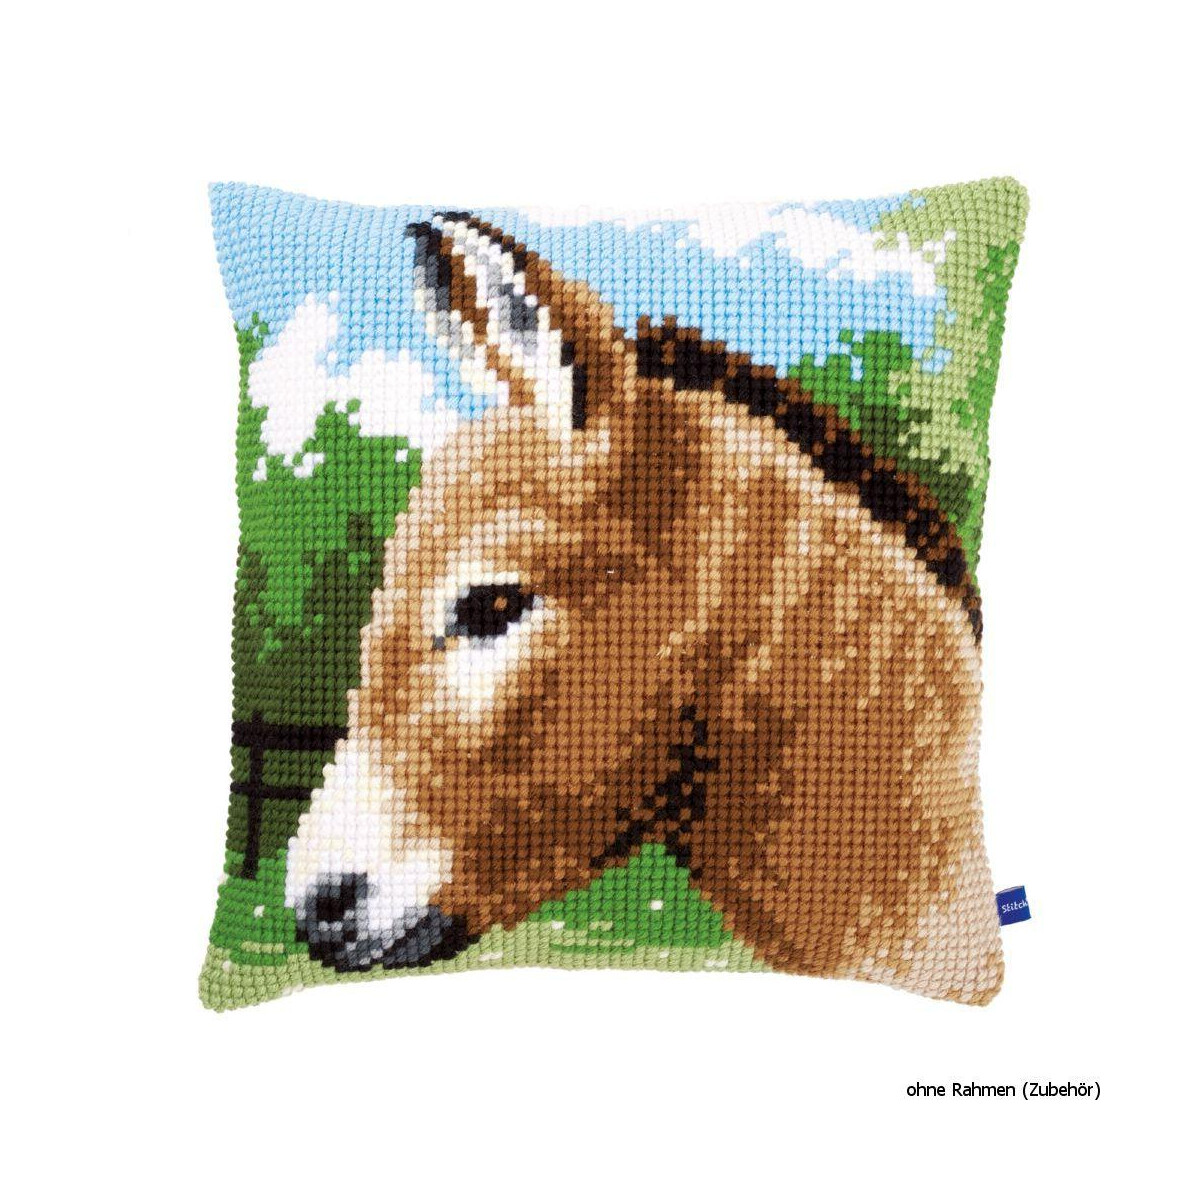 Vervaco stamped cross stitch kit cushion Donkey, DIY